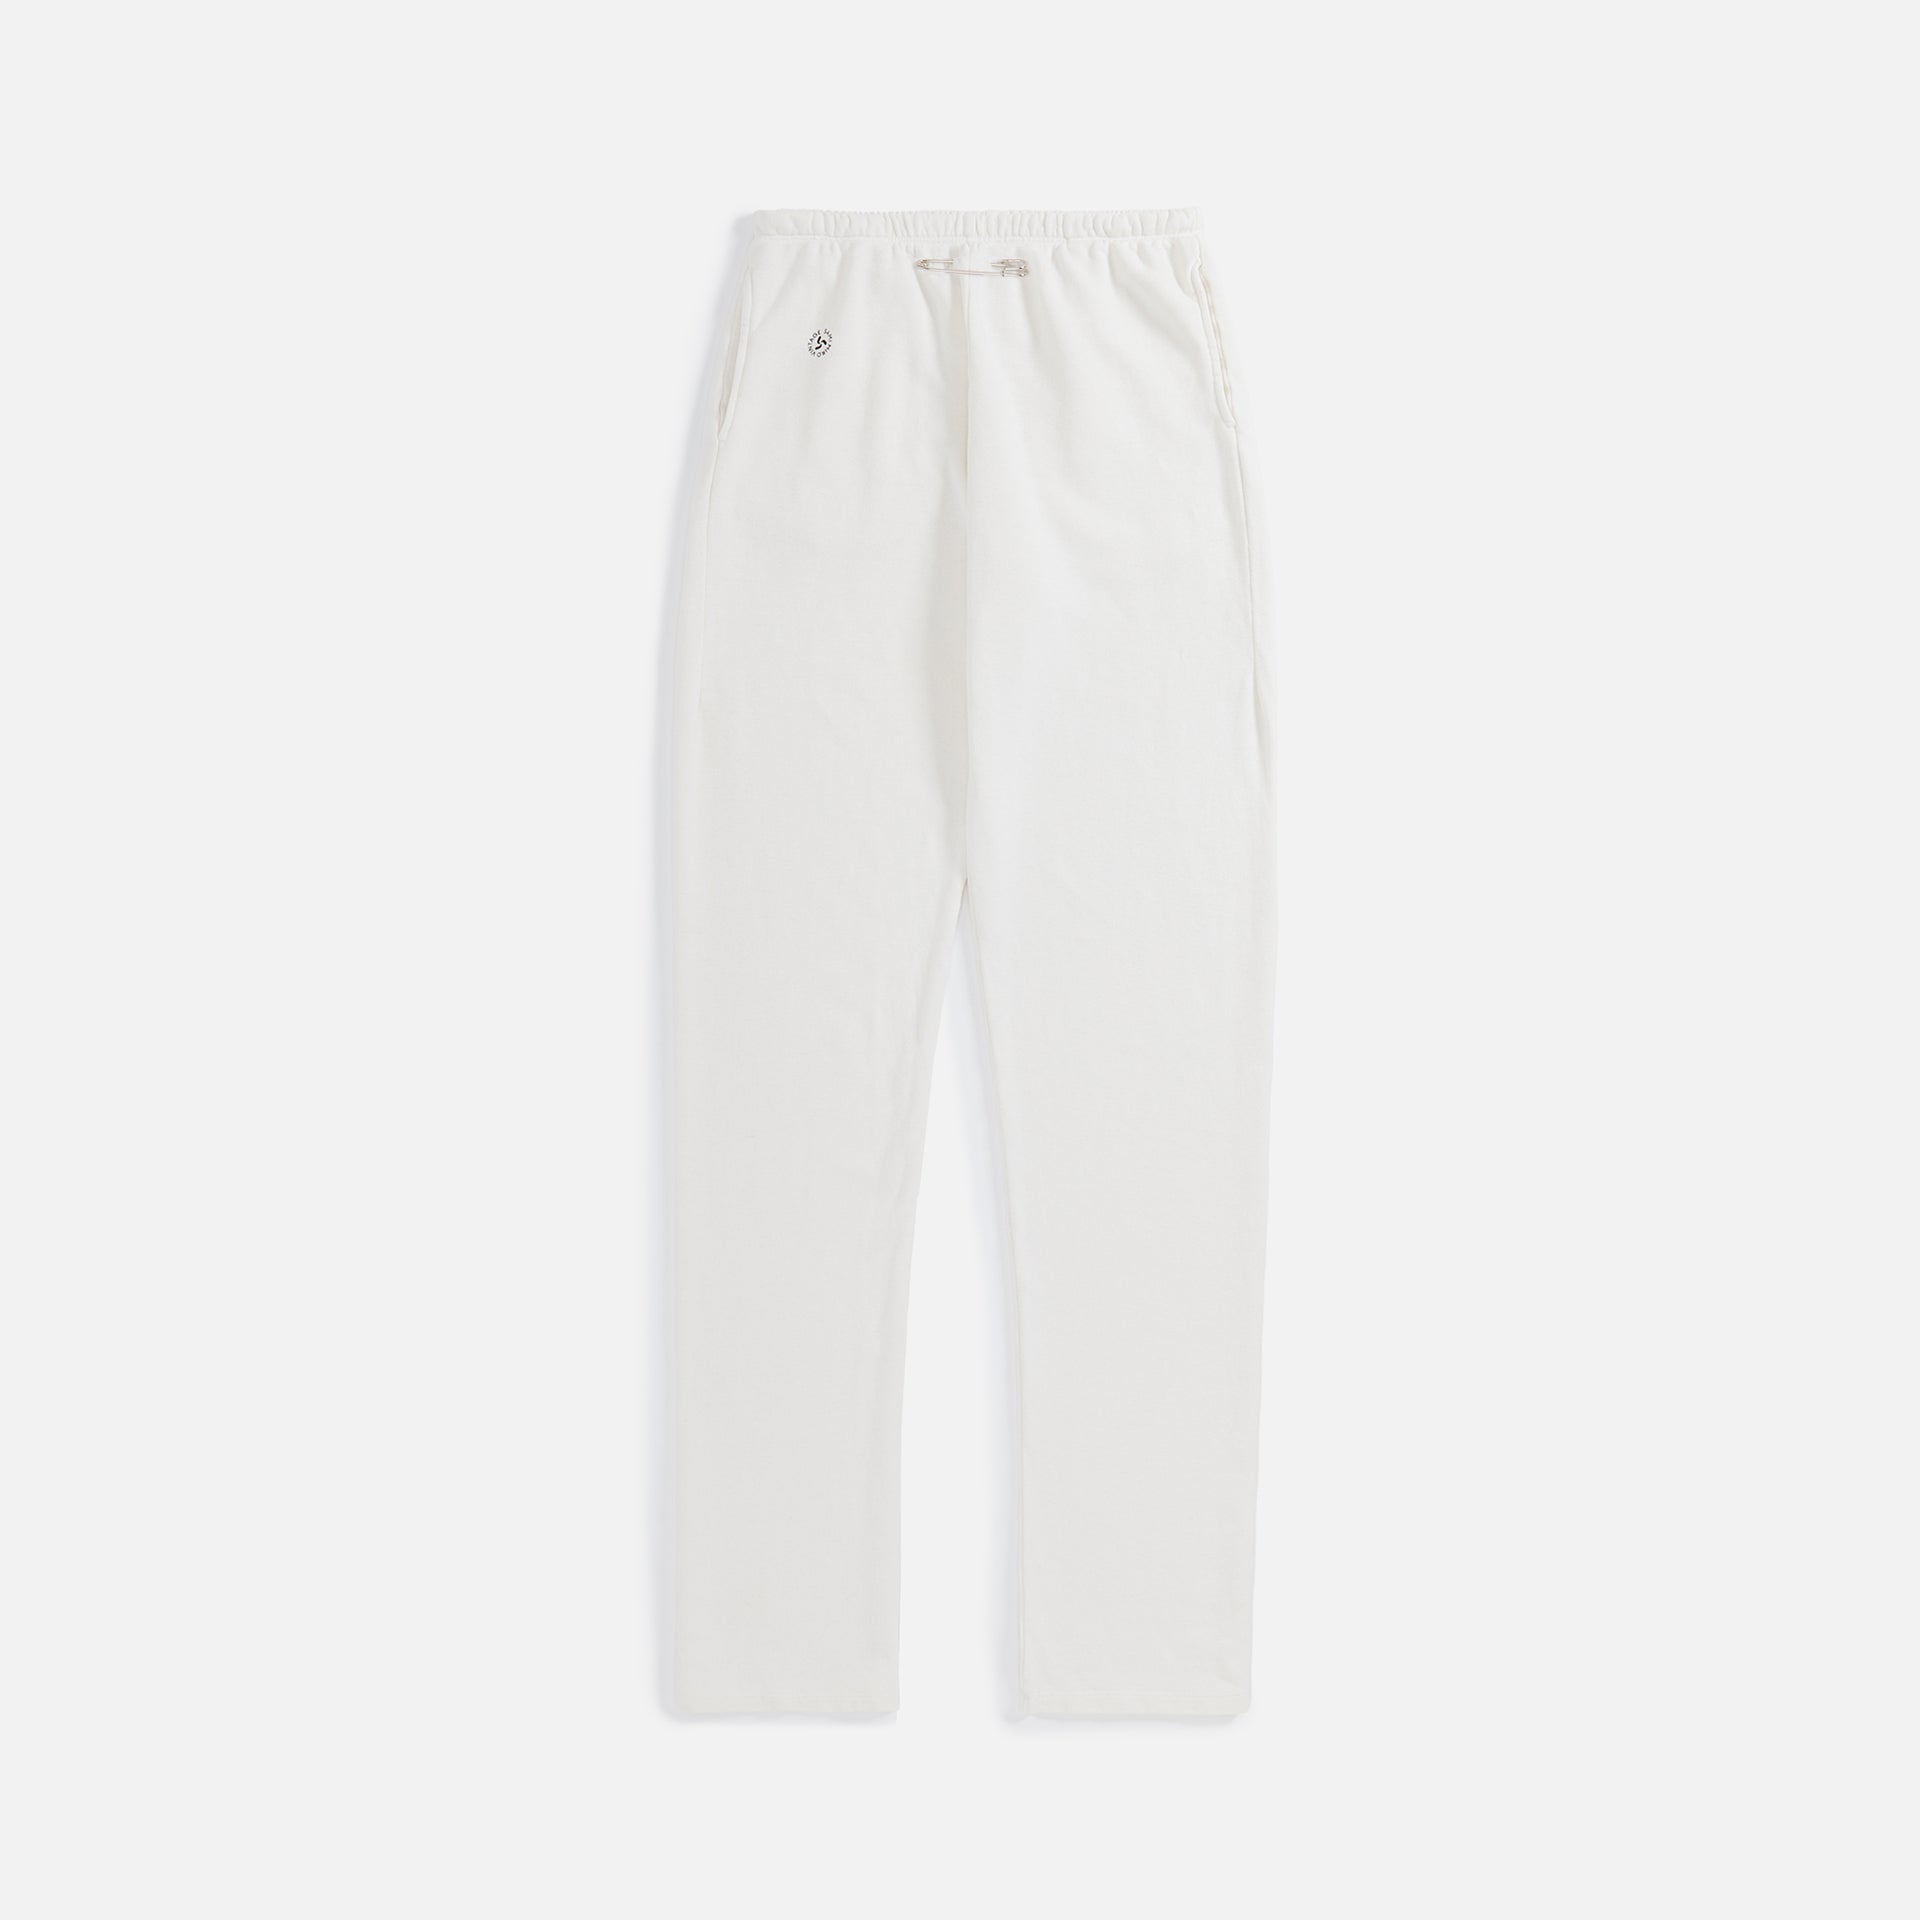 Sami Miro Safety Pin Sweatpants - White